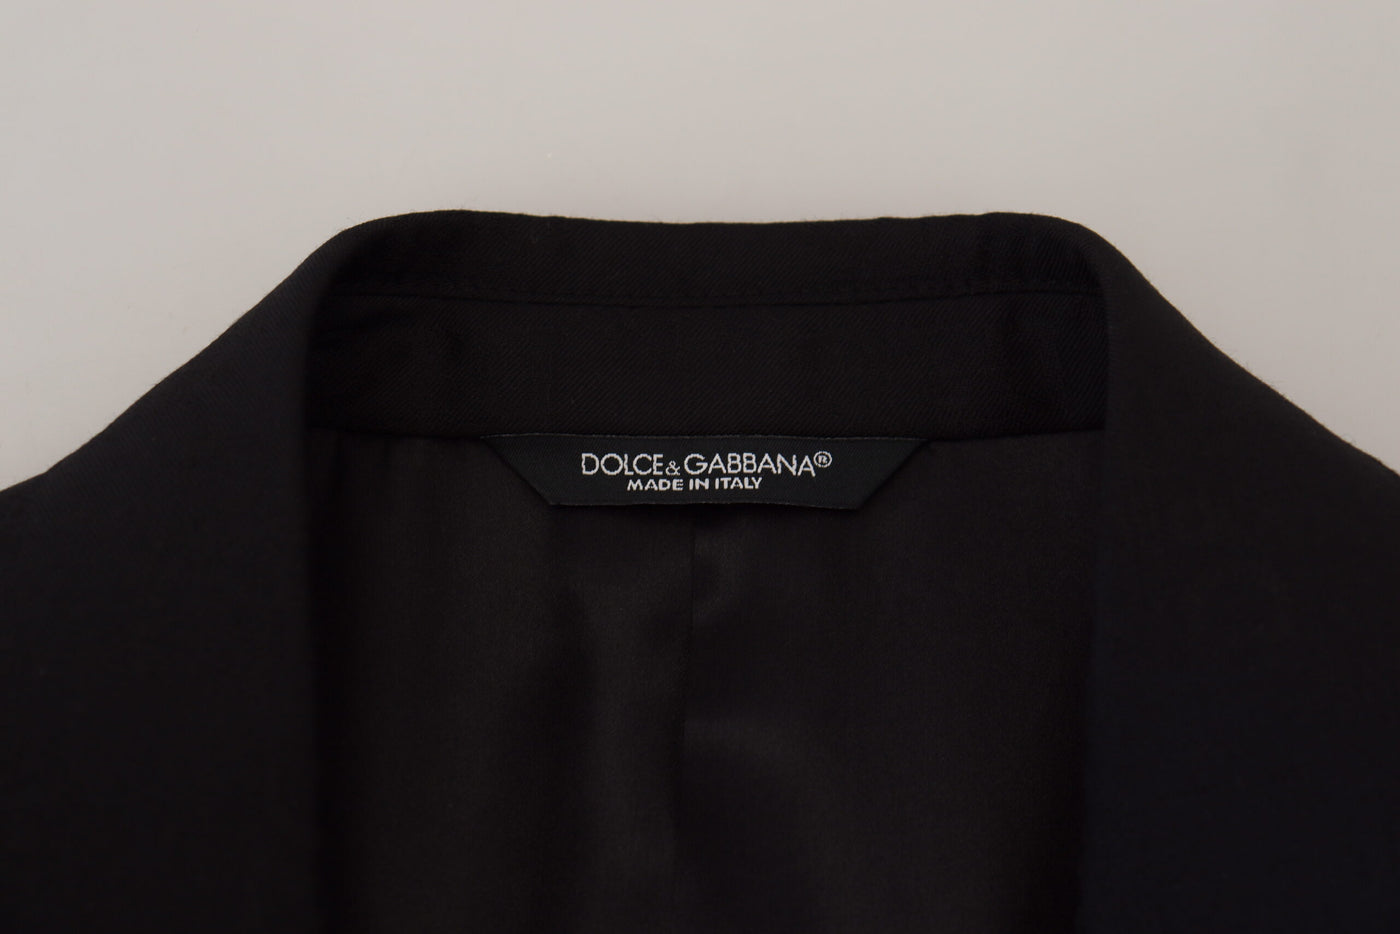 Dolce & Gabbana Black Wool Formal Coat Martini Blazer